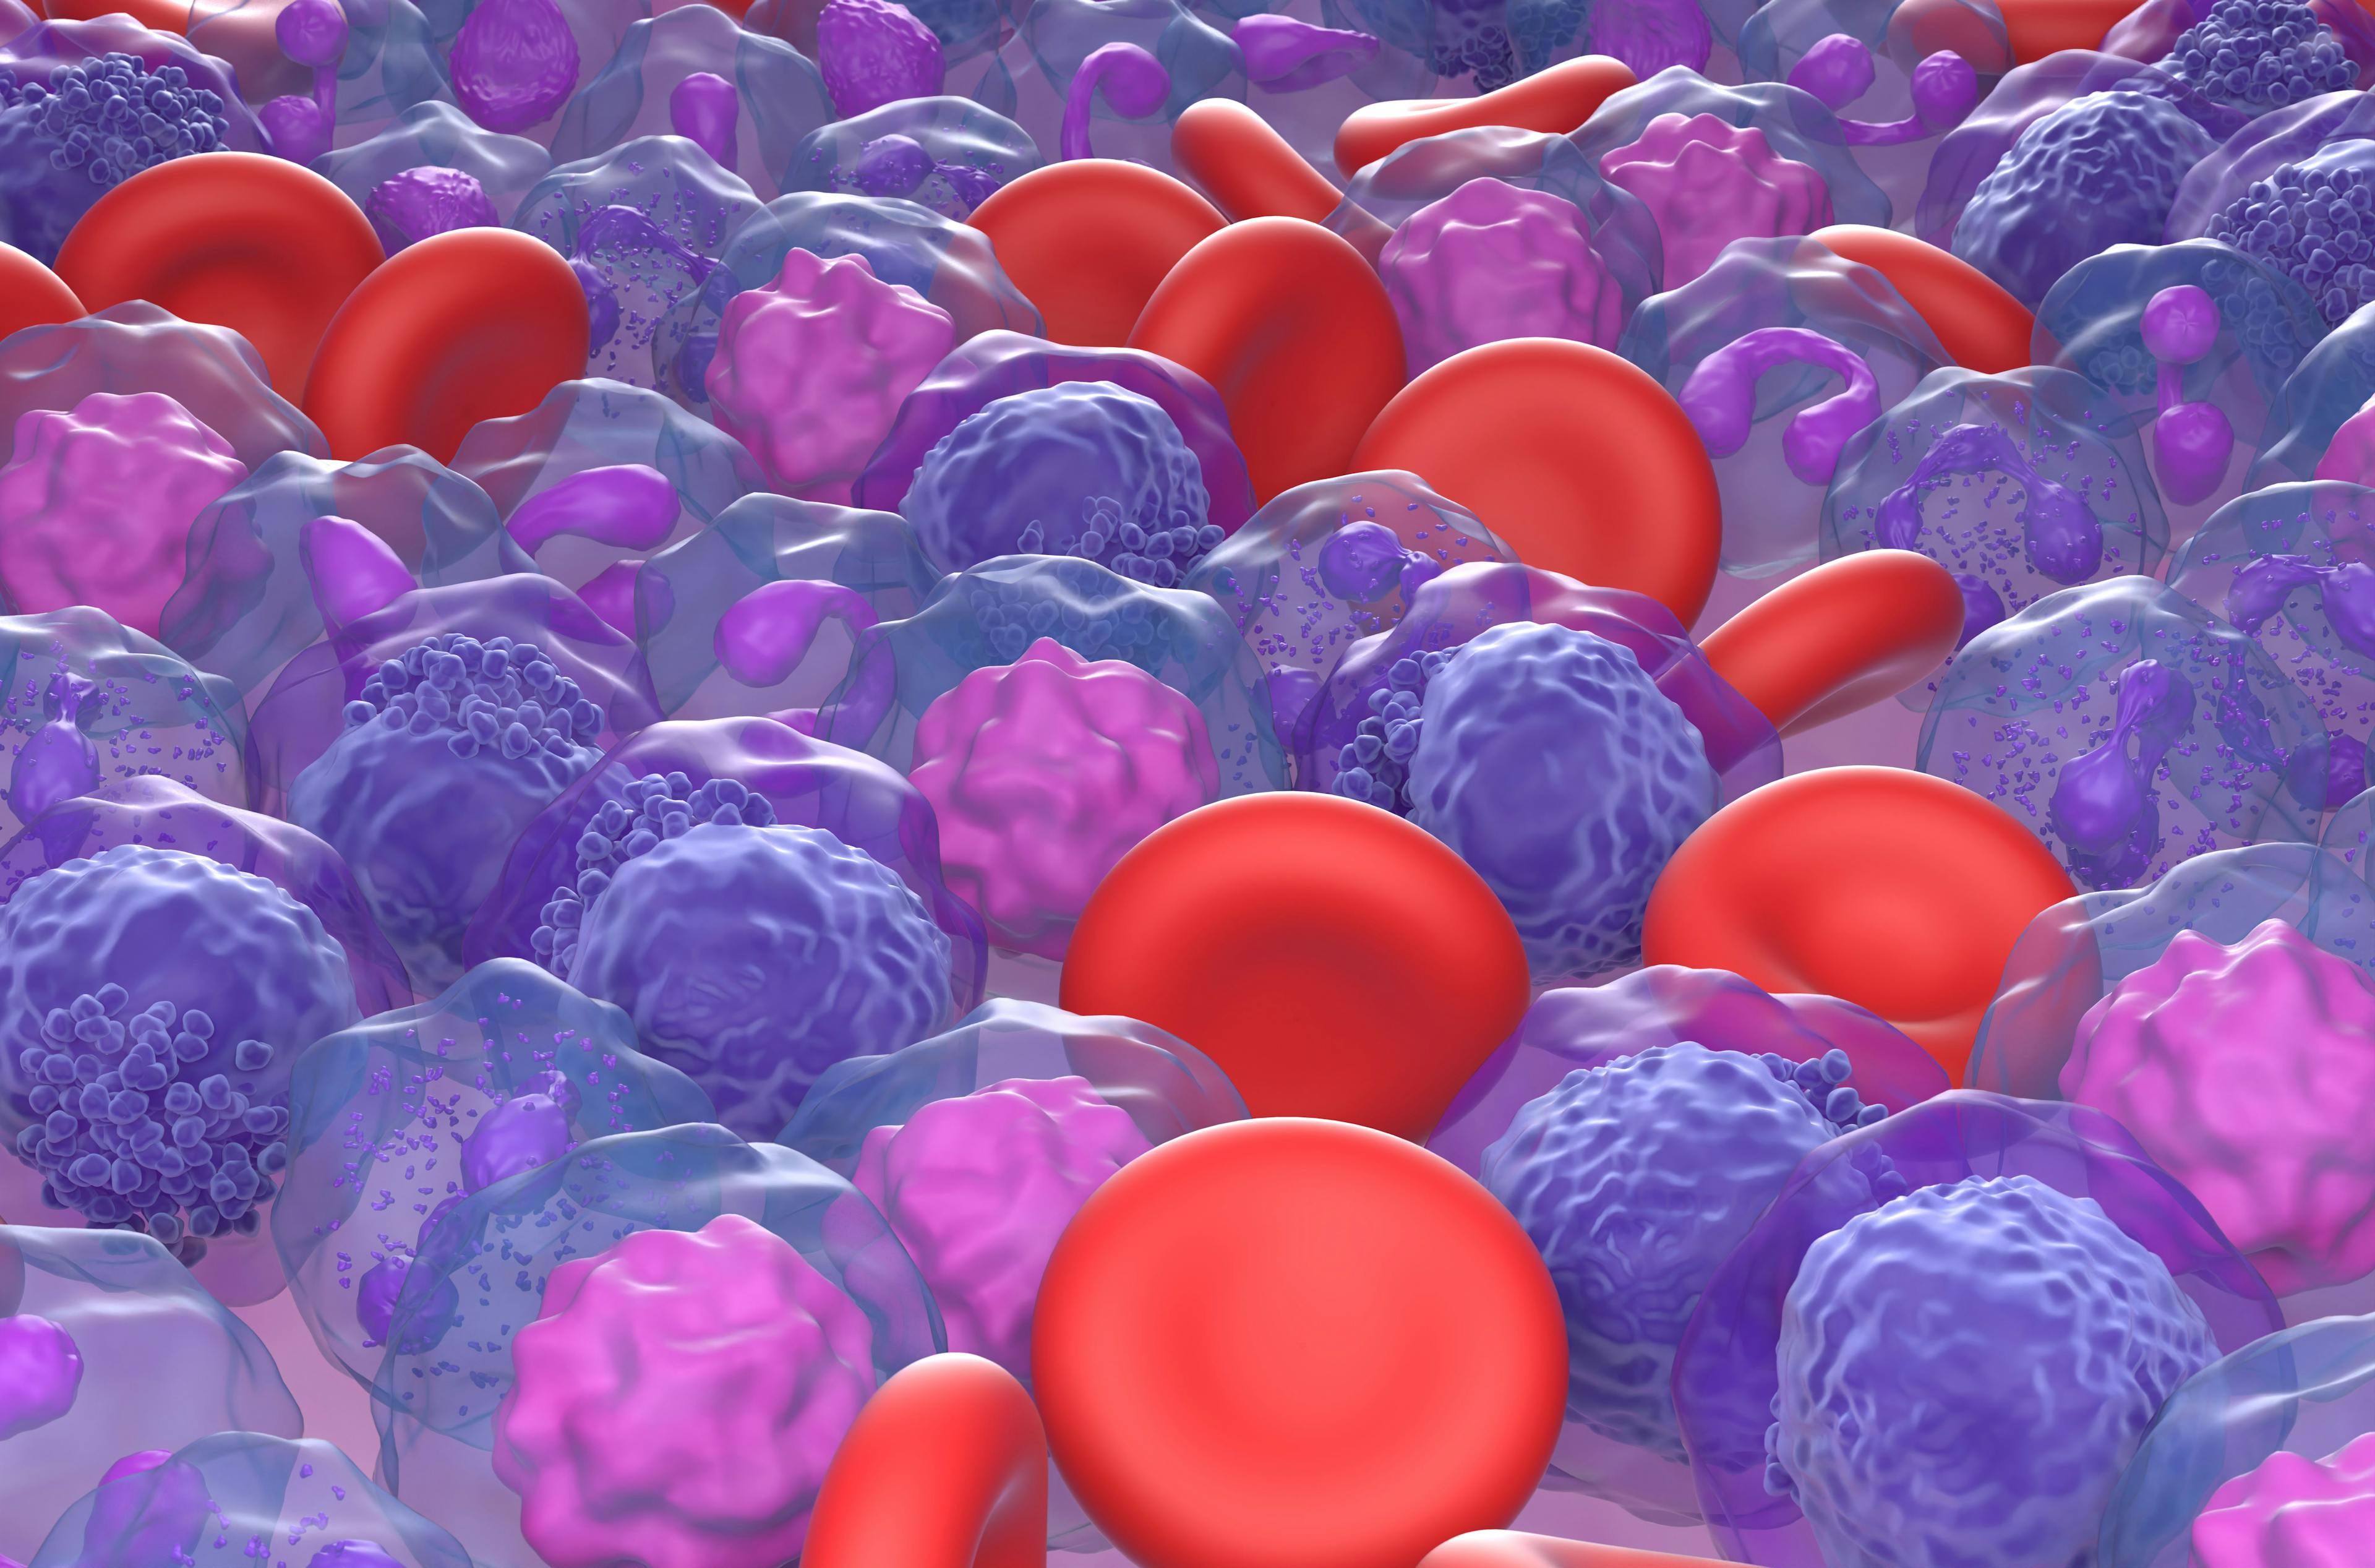 Acute myeloid leukemia (AML) cells field - closeup view 3d illustration| Image Credit: © LASZLO - www.stock.adobe.com